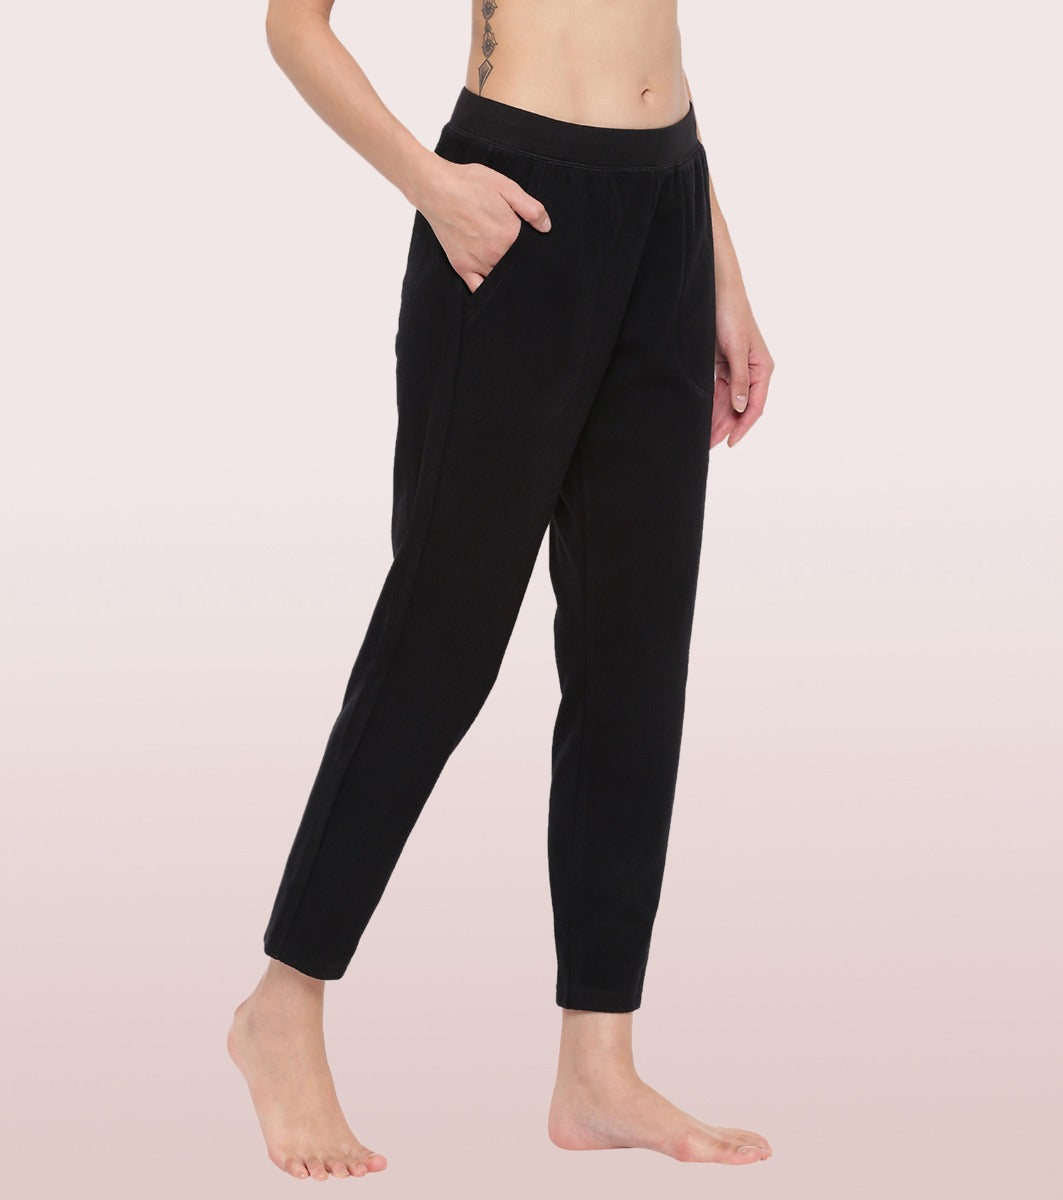 Plus Size Winter Fleece Track Pants For Women - Pink at Rs 899.00 | Sports  Lower, Sports Tack Pant, Lower Pants, Running Pants, ट्रैक पैंट - Tanya  Enterprises, Ludhiana | ID: 2852249842191